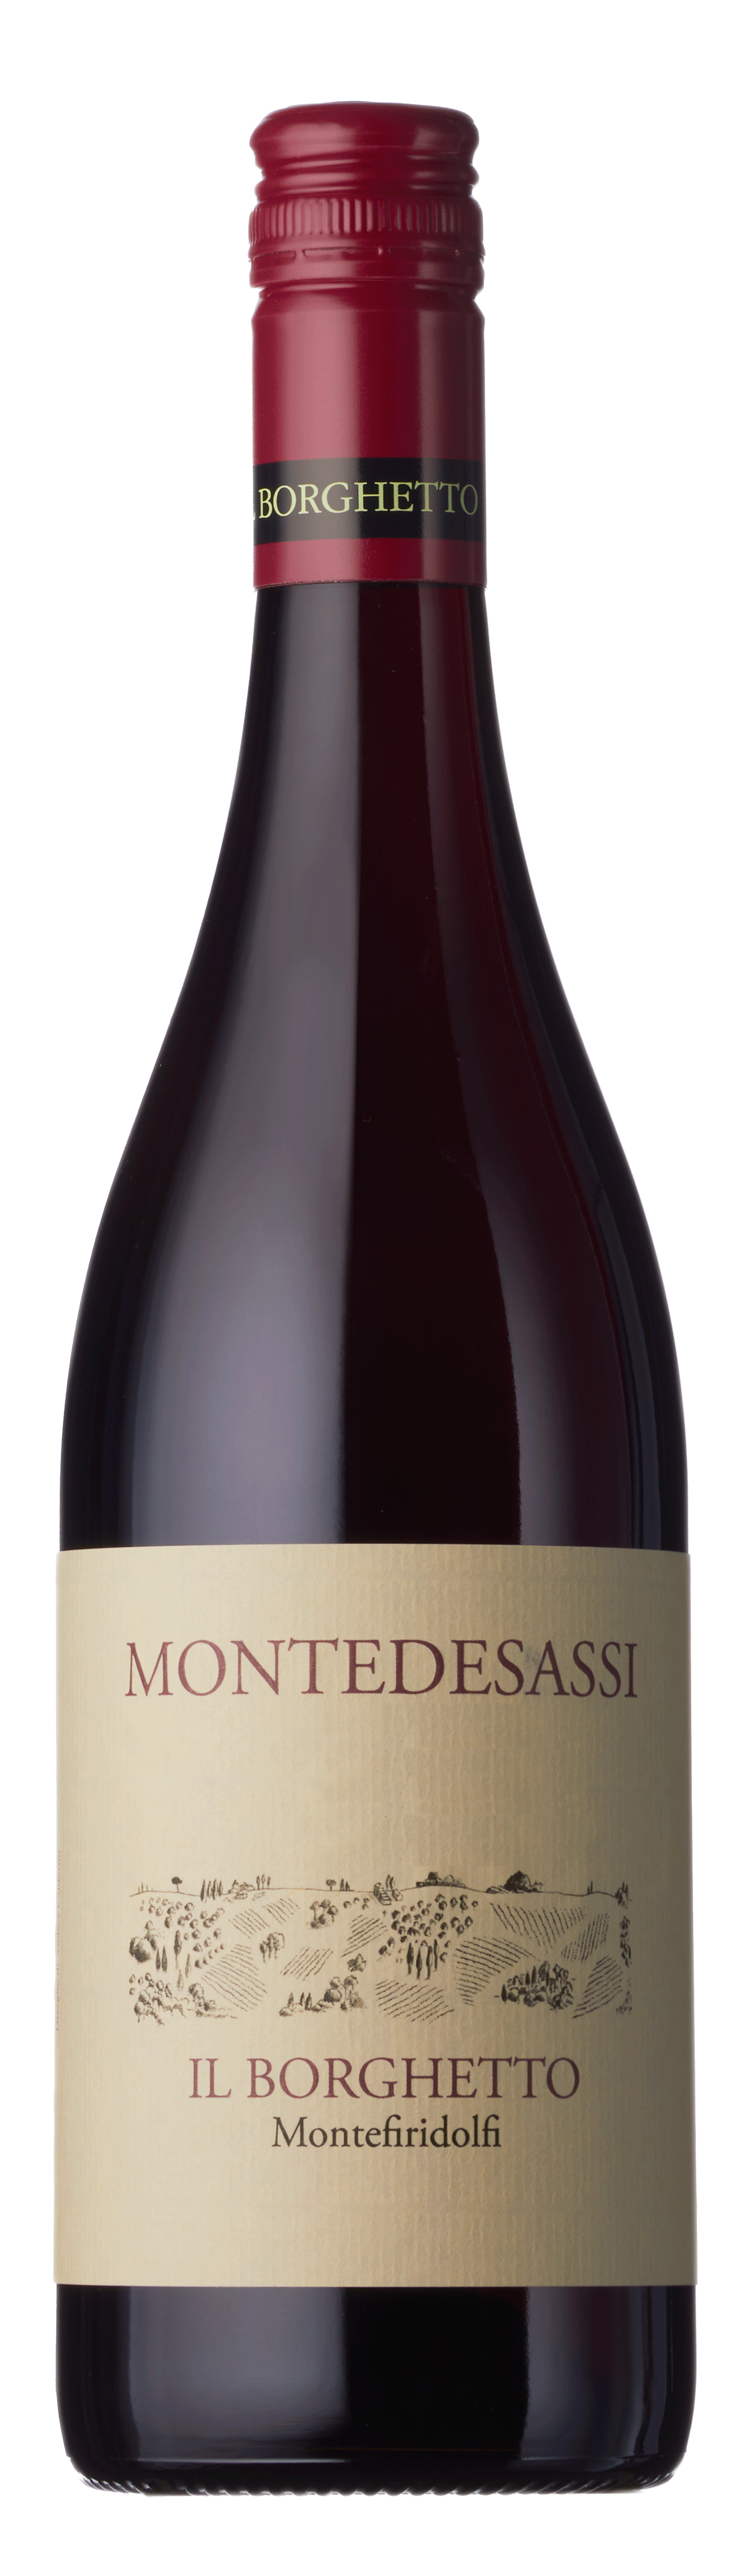 Bottle shot - Il Borghetto, Montedesassi, IGP, Tuscany, Italy